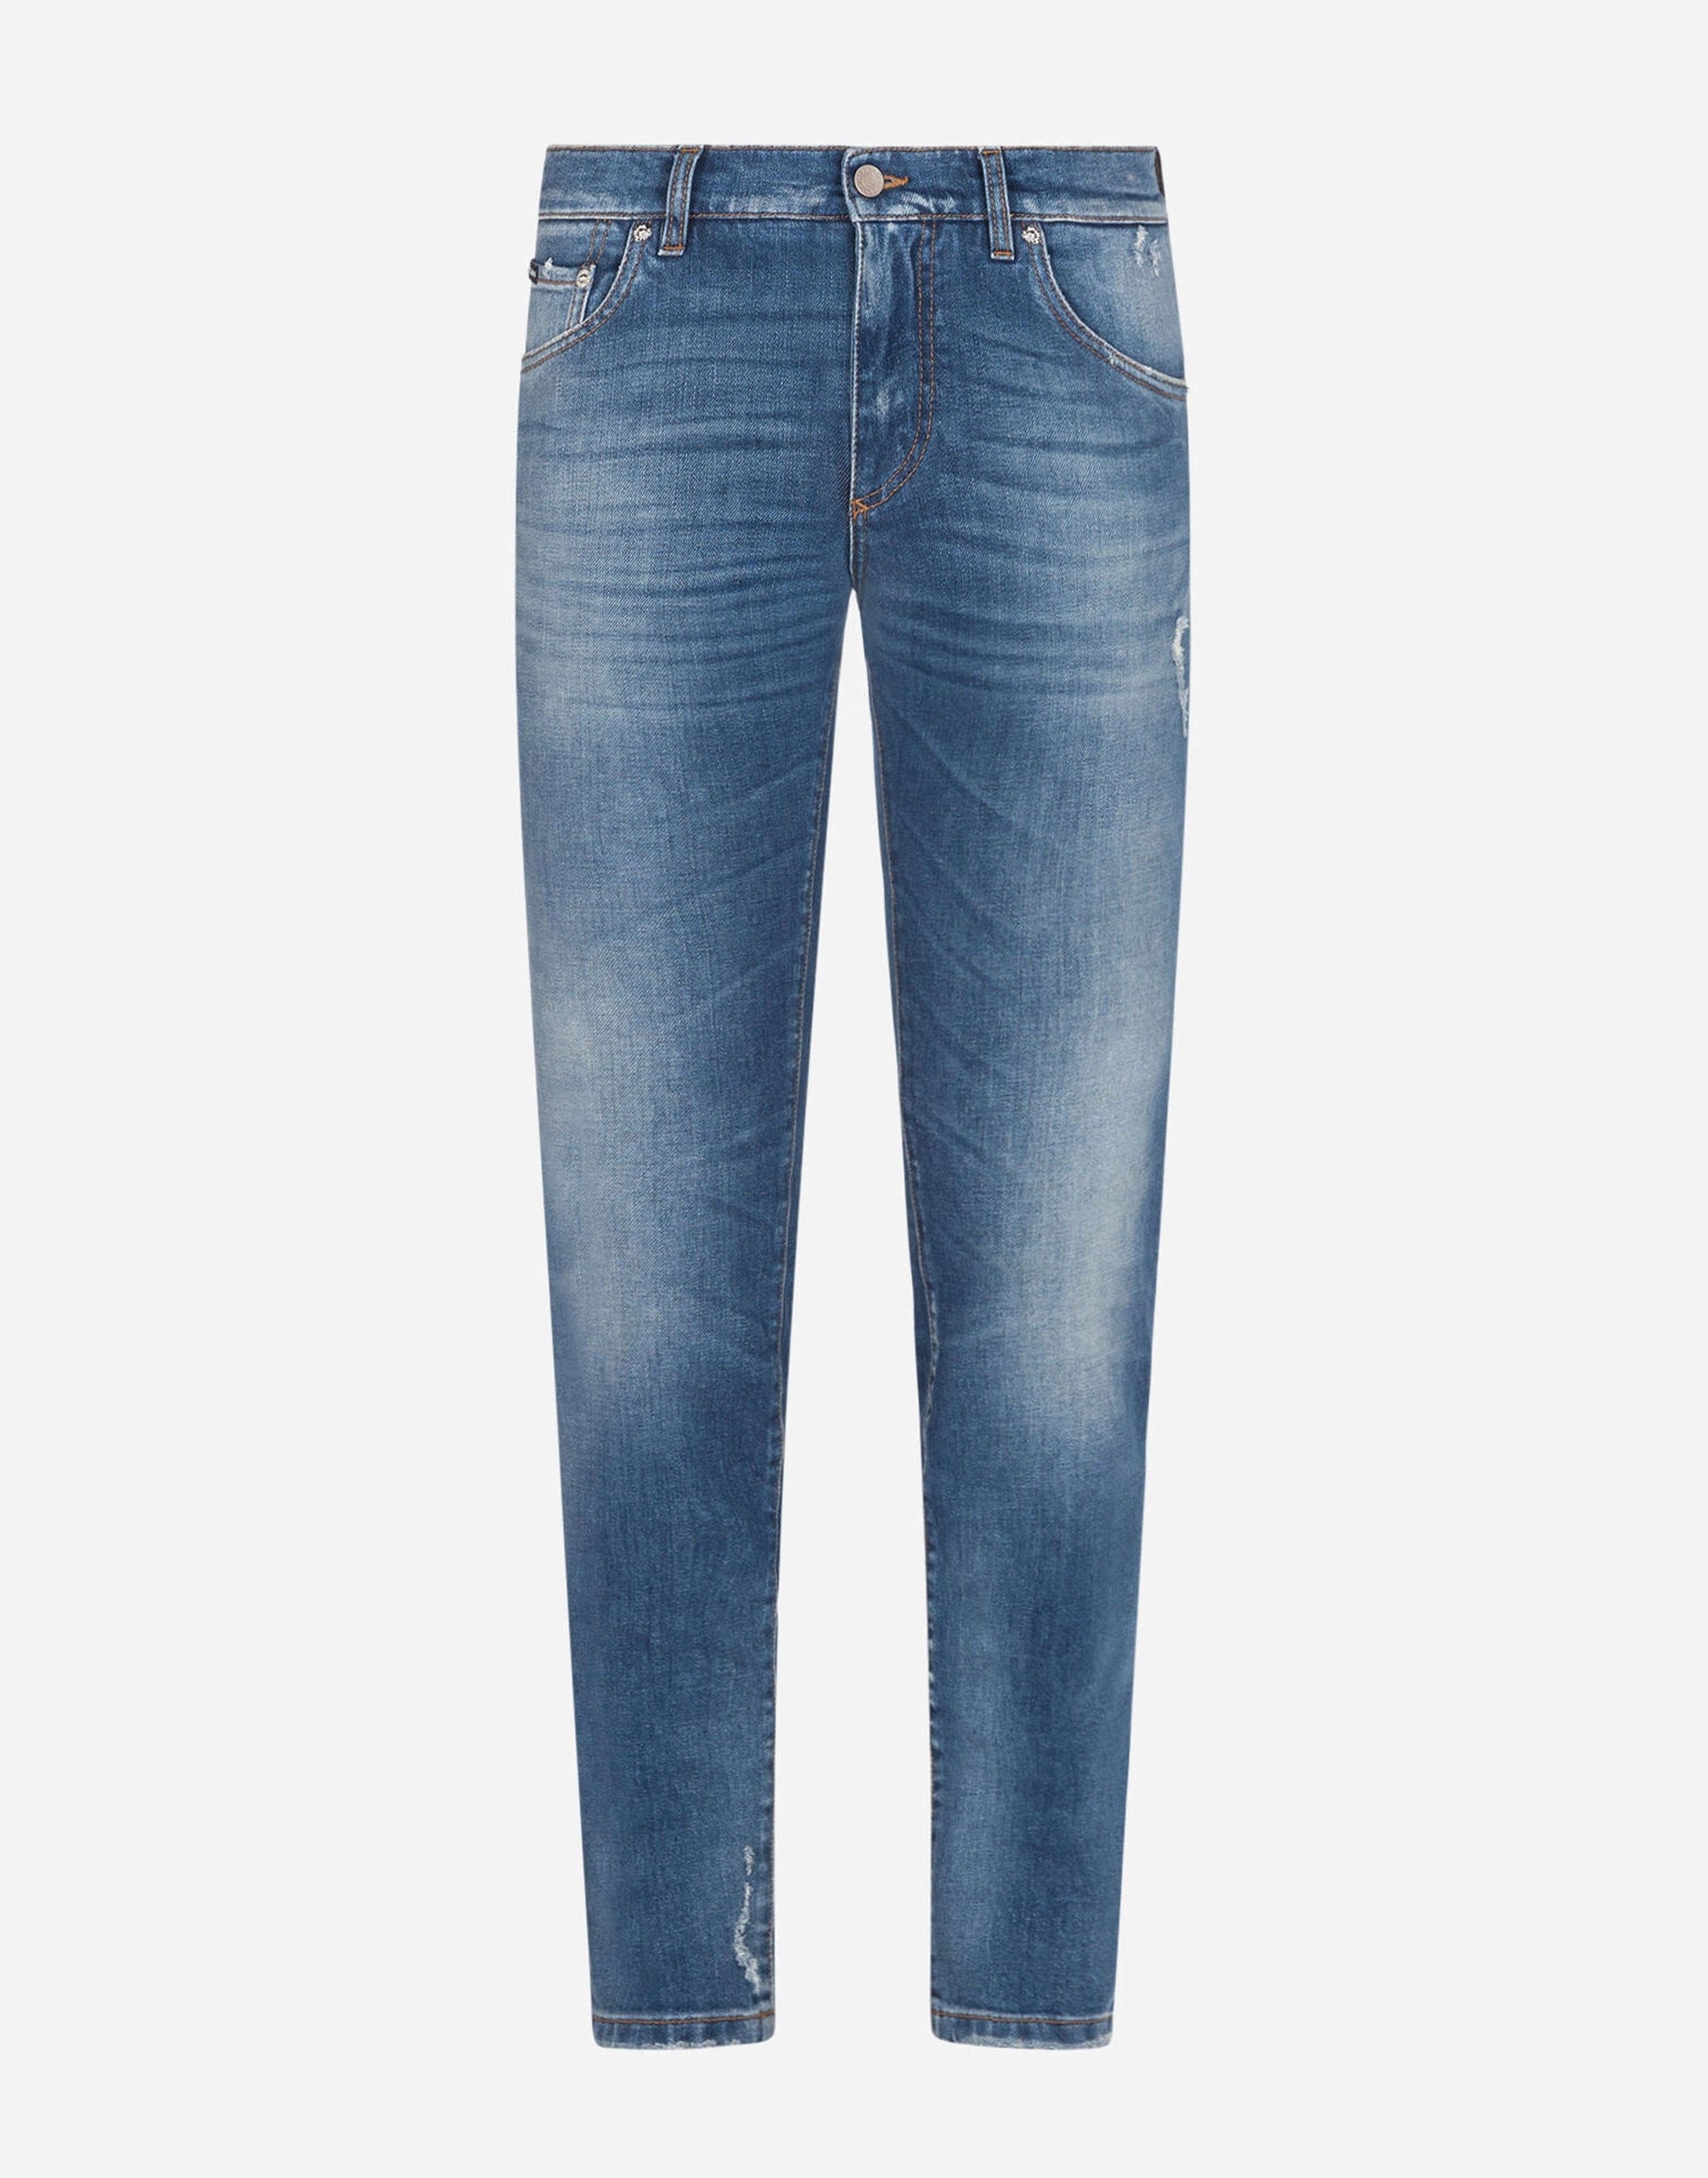 Dolce & Gabbana Stretch Skinny Jeans With Maiolica Print